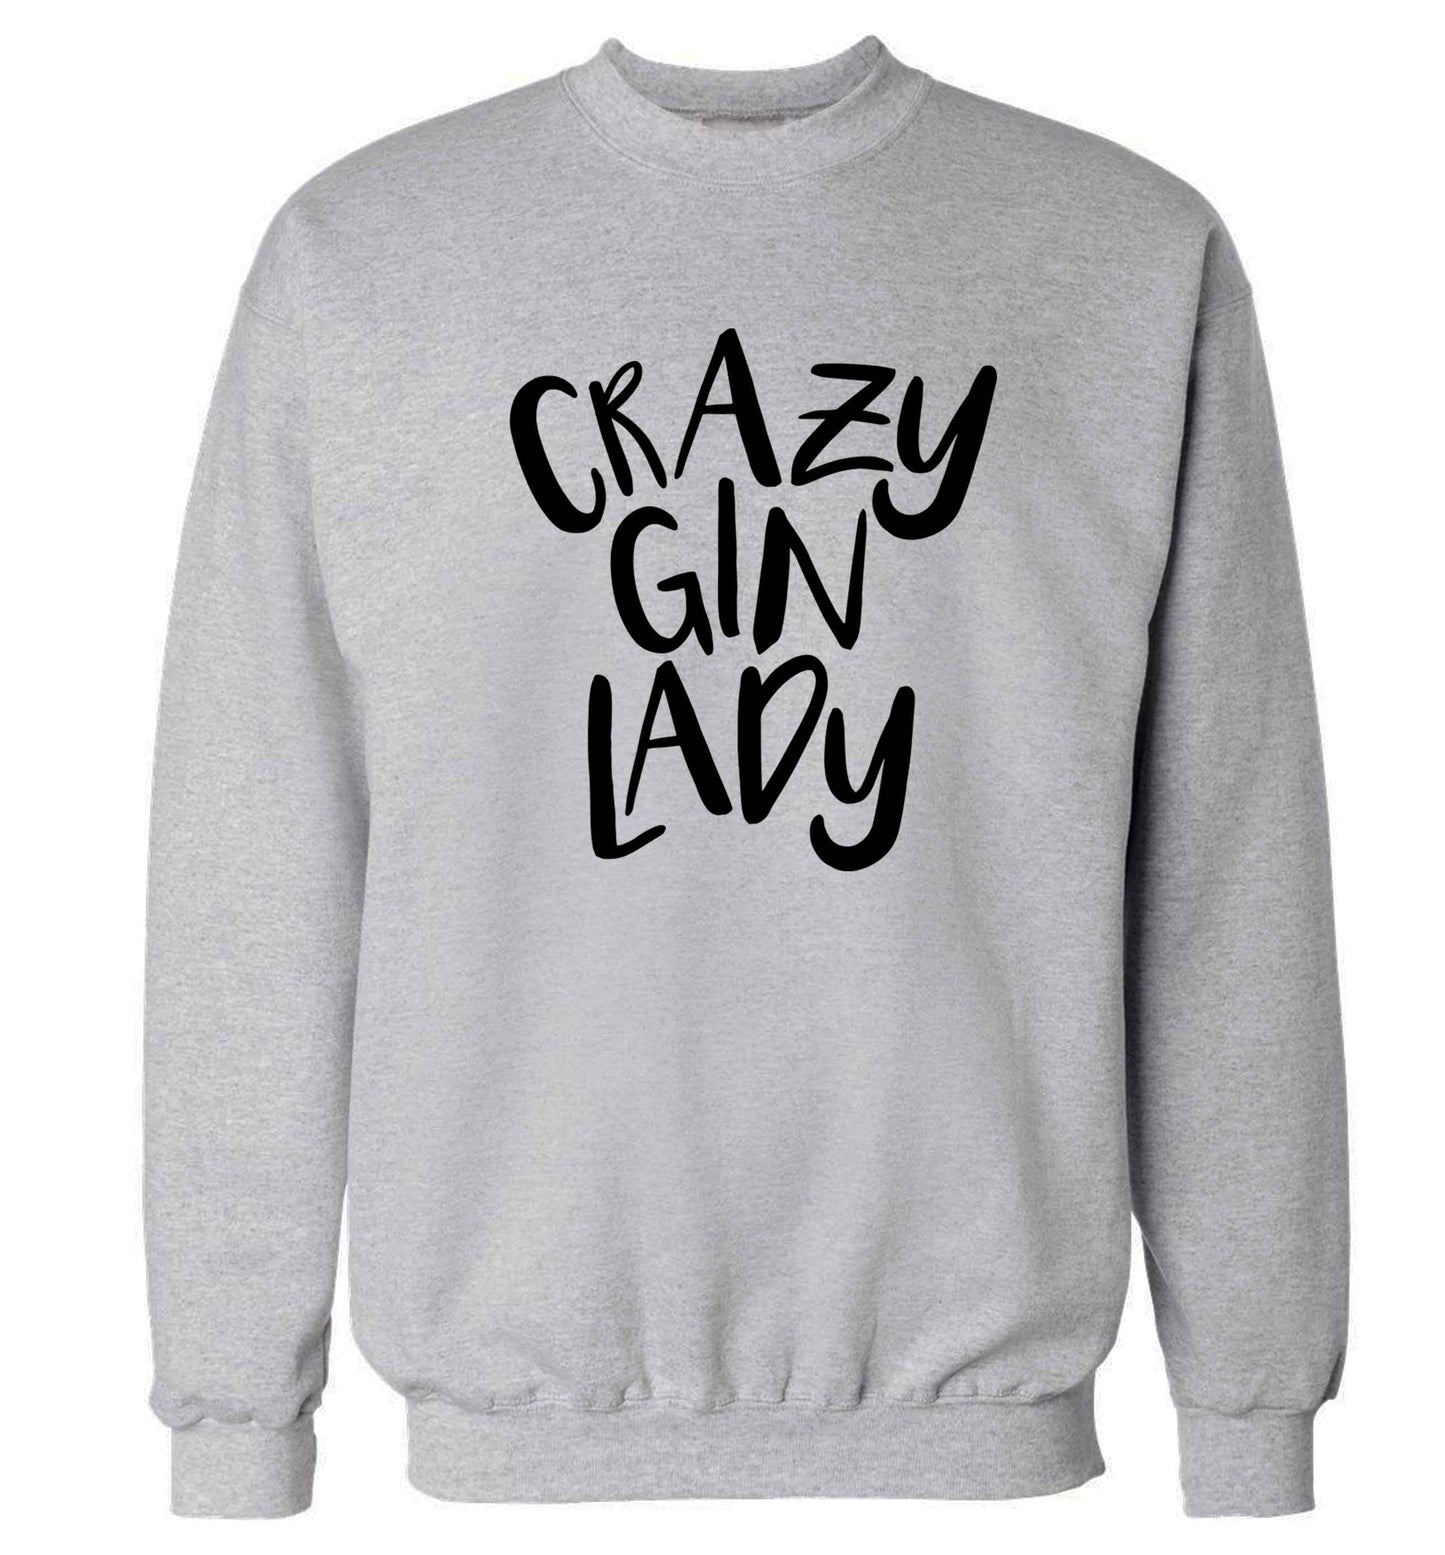 Crazy gin lady Adult's unisex grey Sweater 2XL